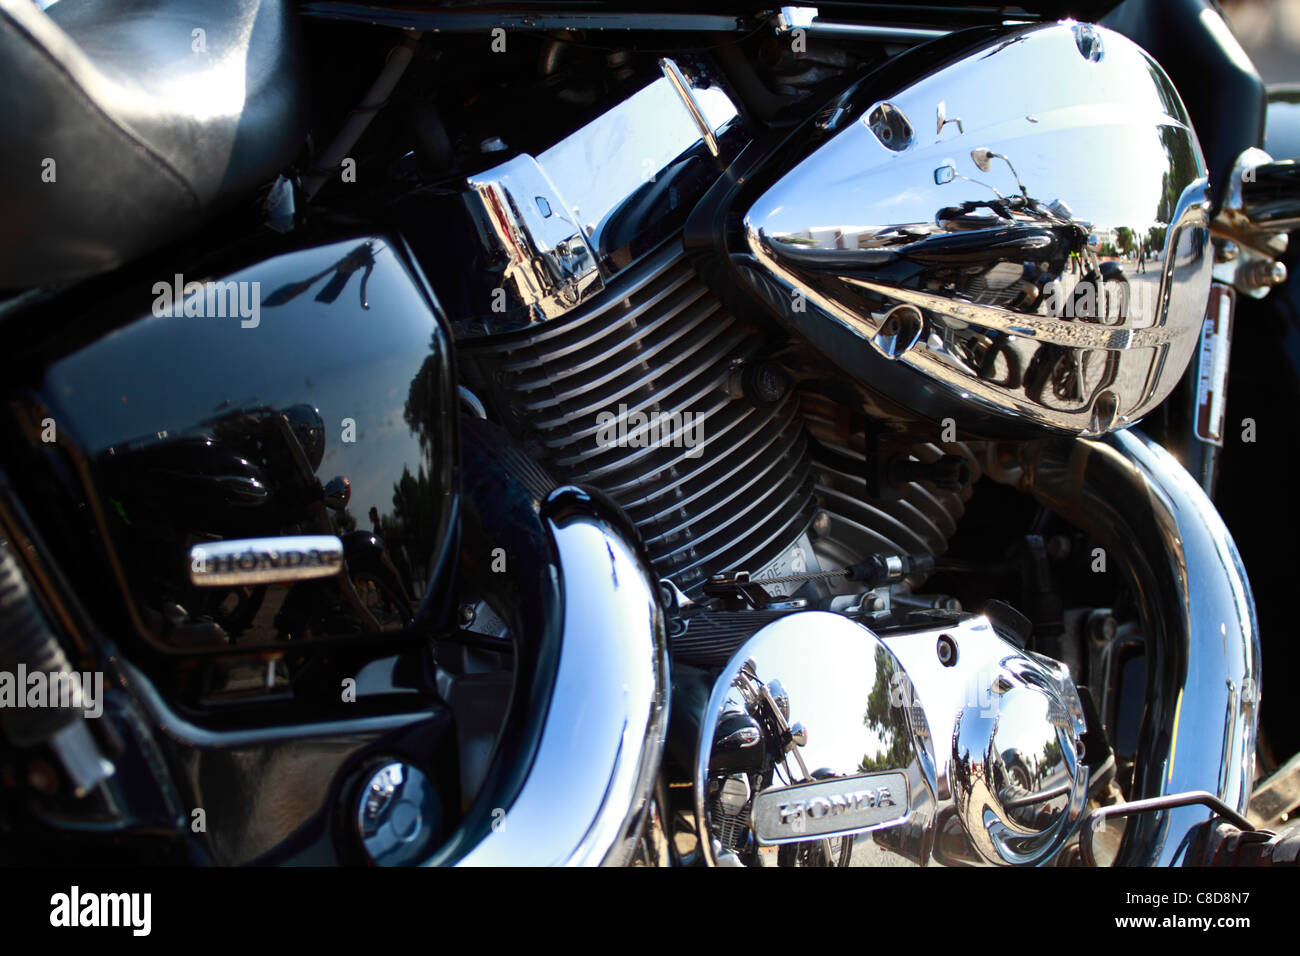 Honda Shadow, motor detail Stock Photo